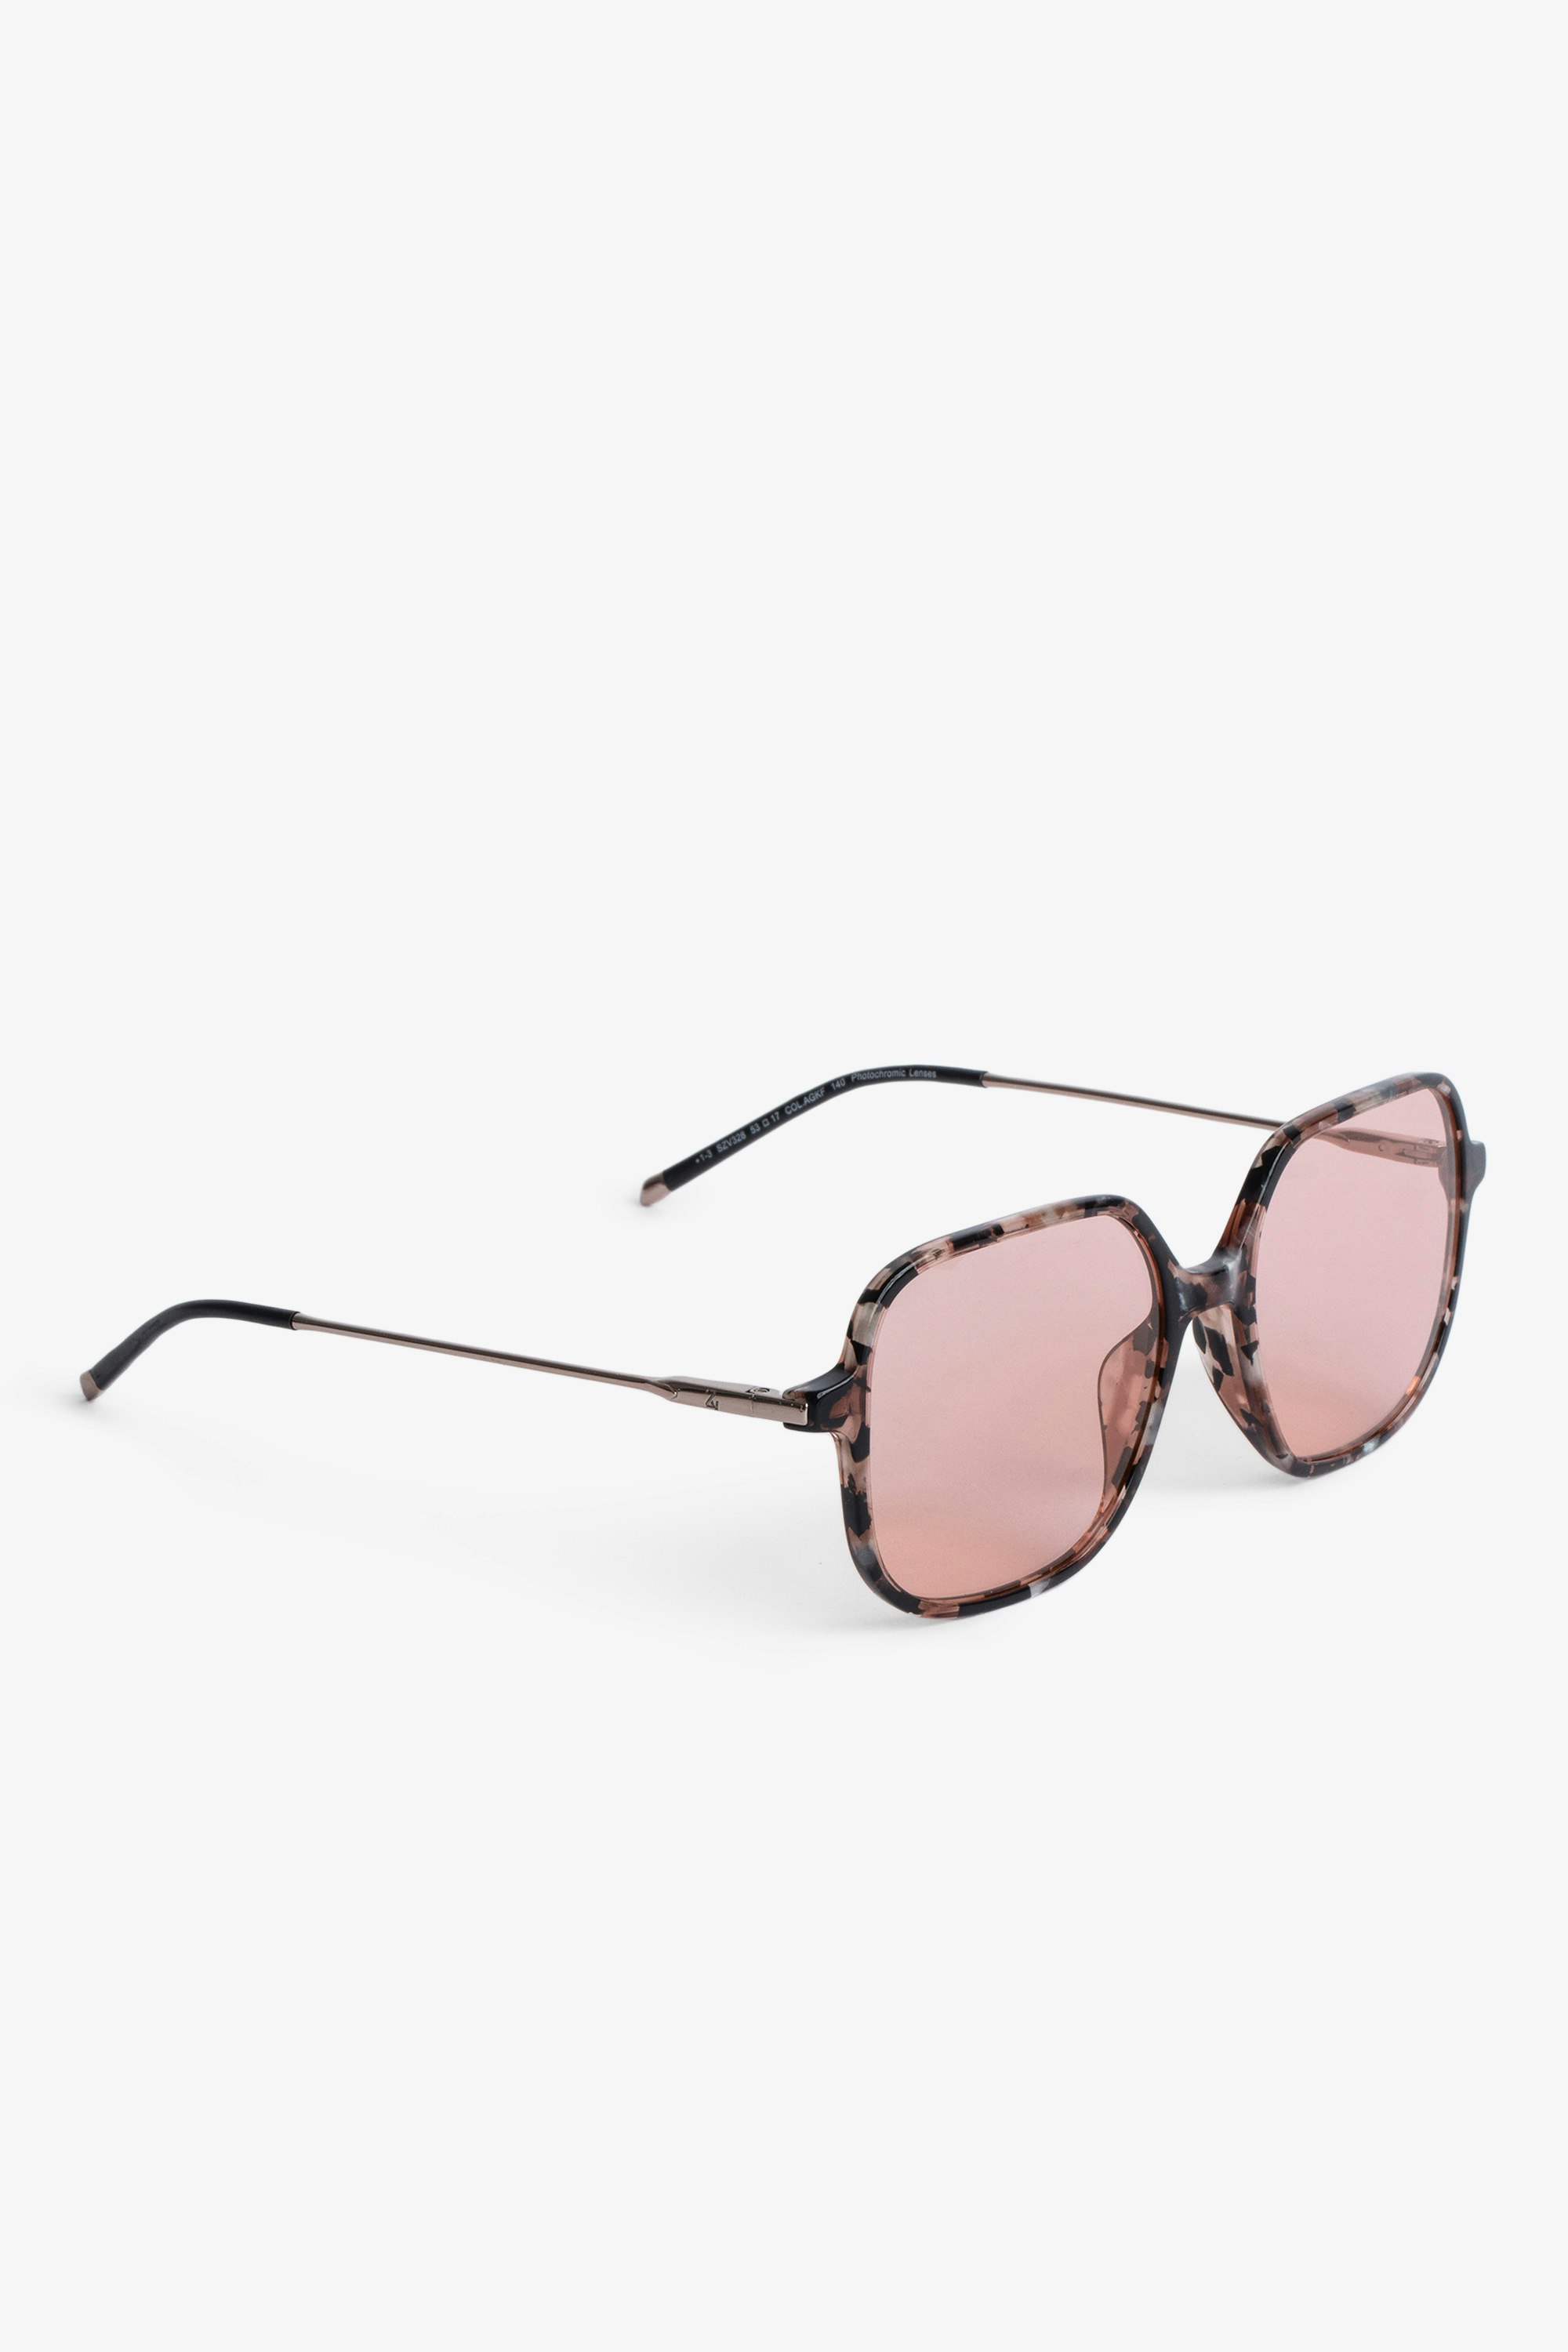 Retro Cylinder Sunglasses  Pink acetate square sunglasses 